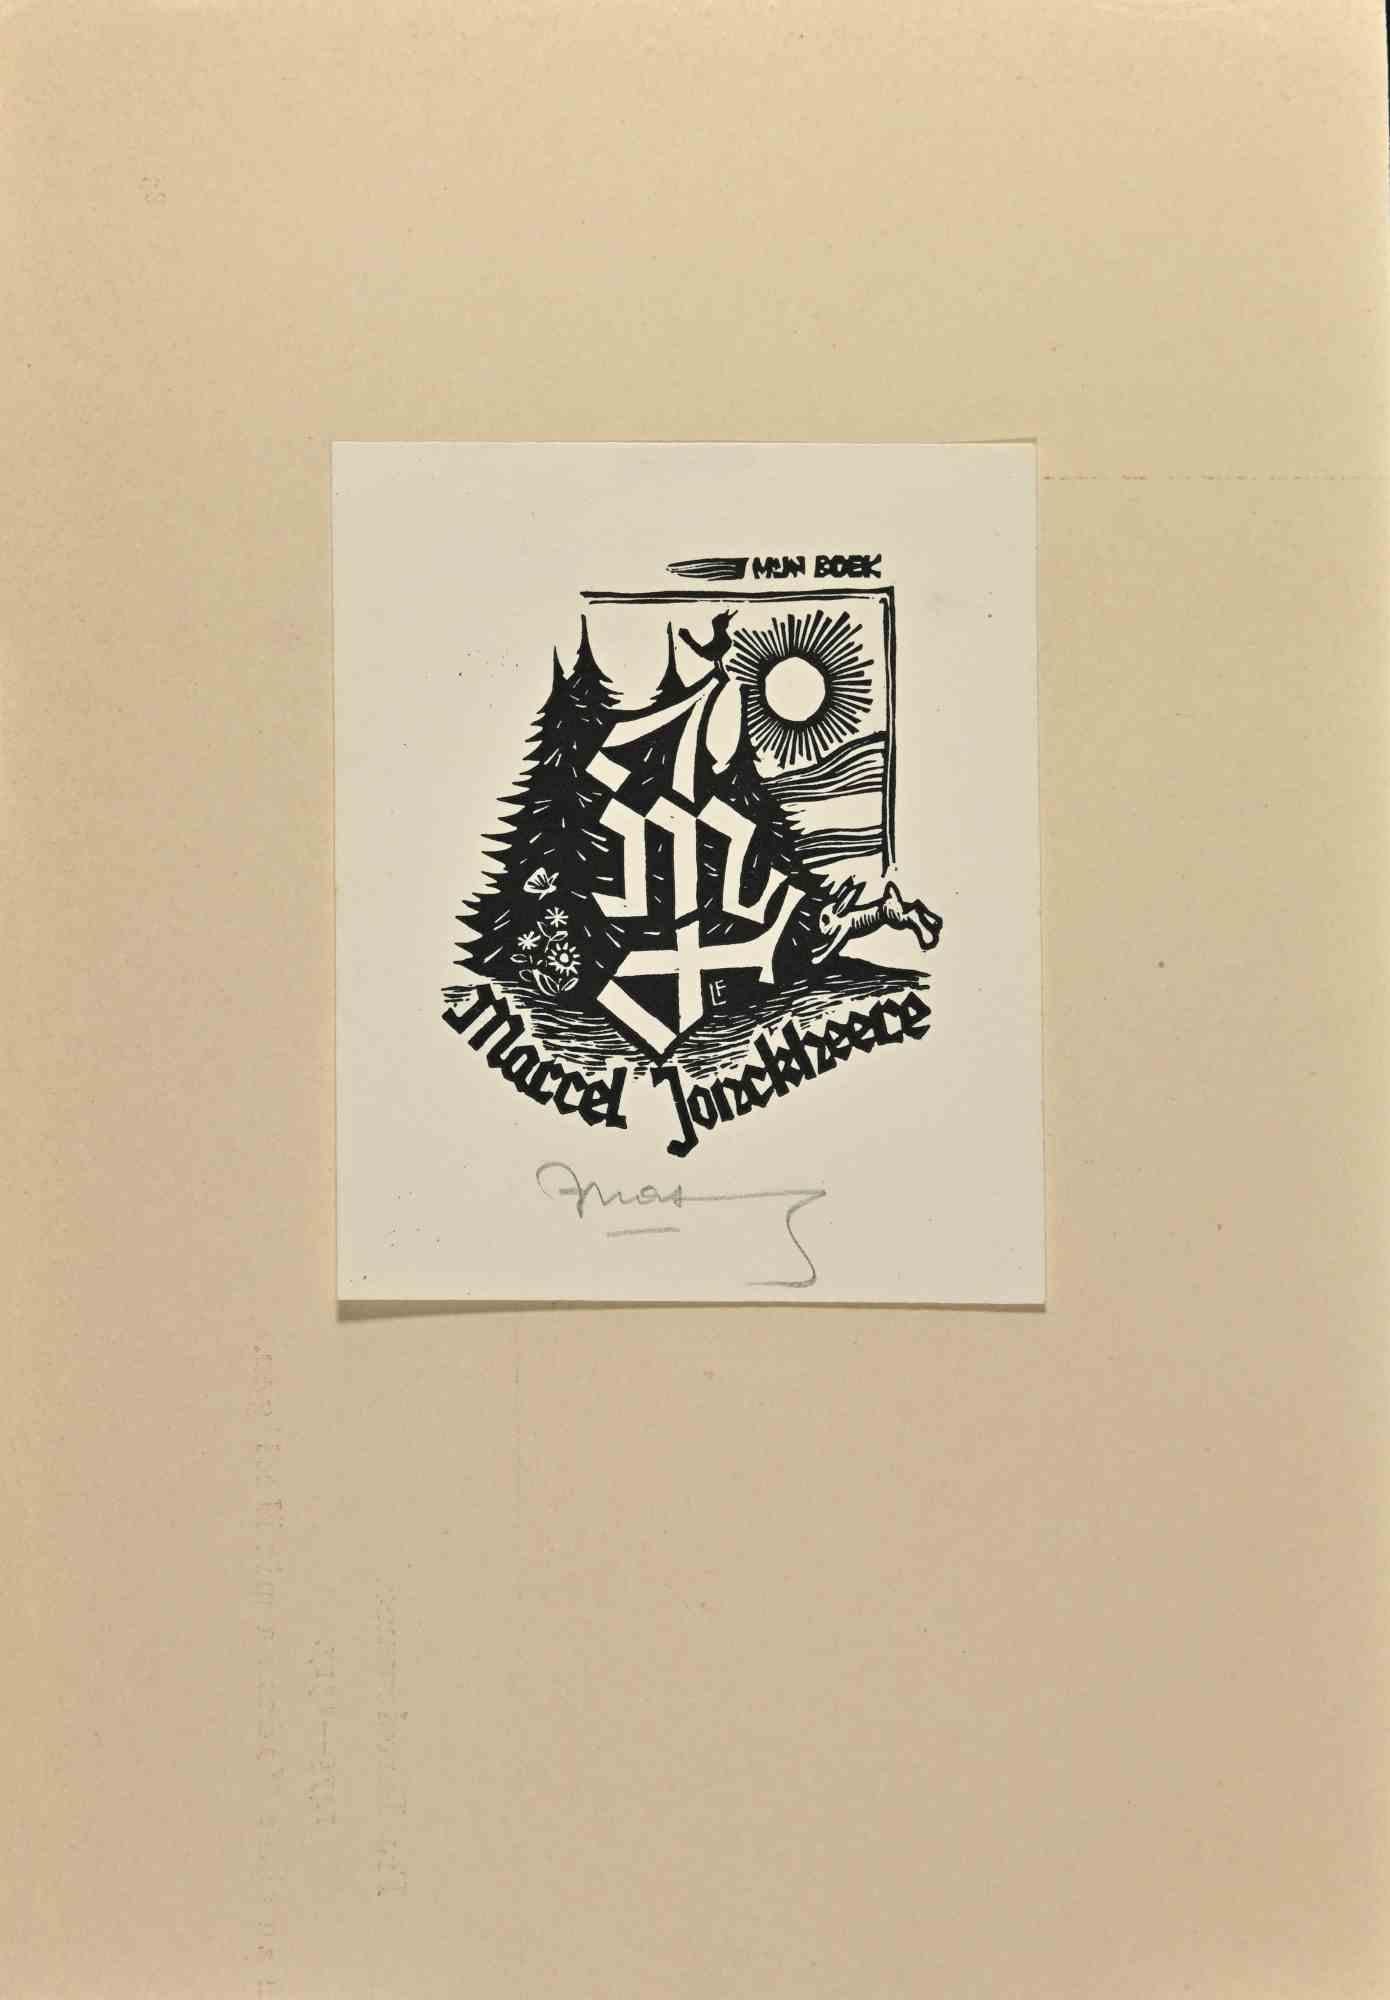  Ex Libris - Maccel Jonckheece - Woodcut - Mid-20th Century - Art by Unknown